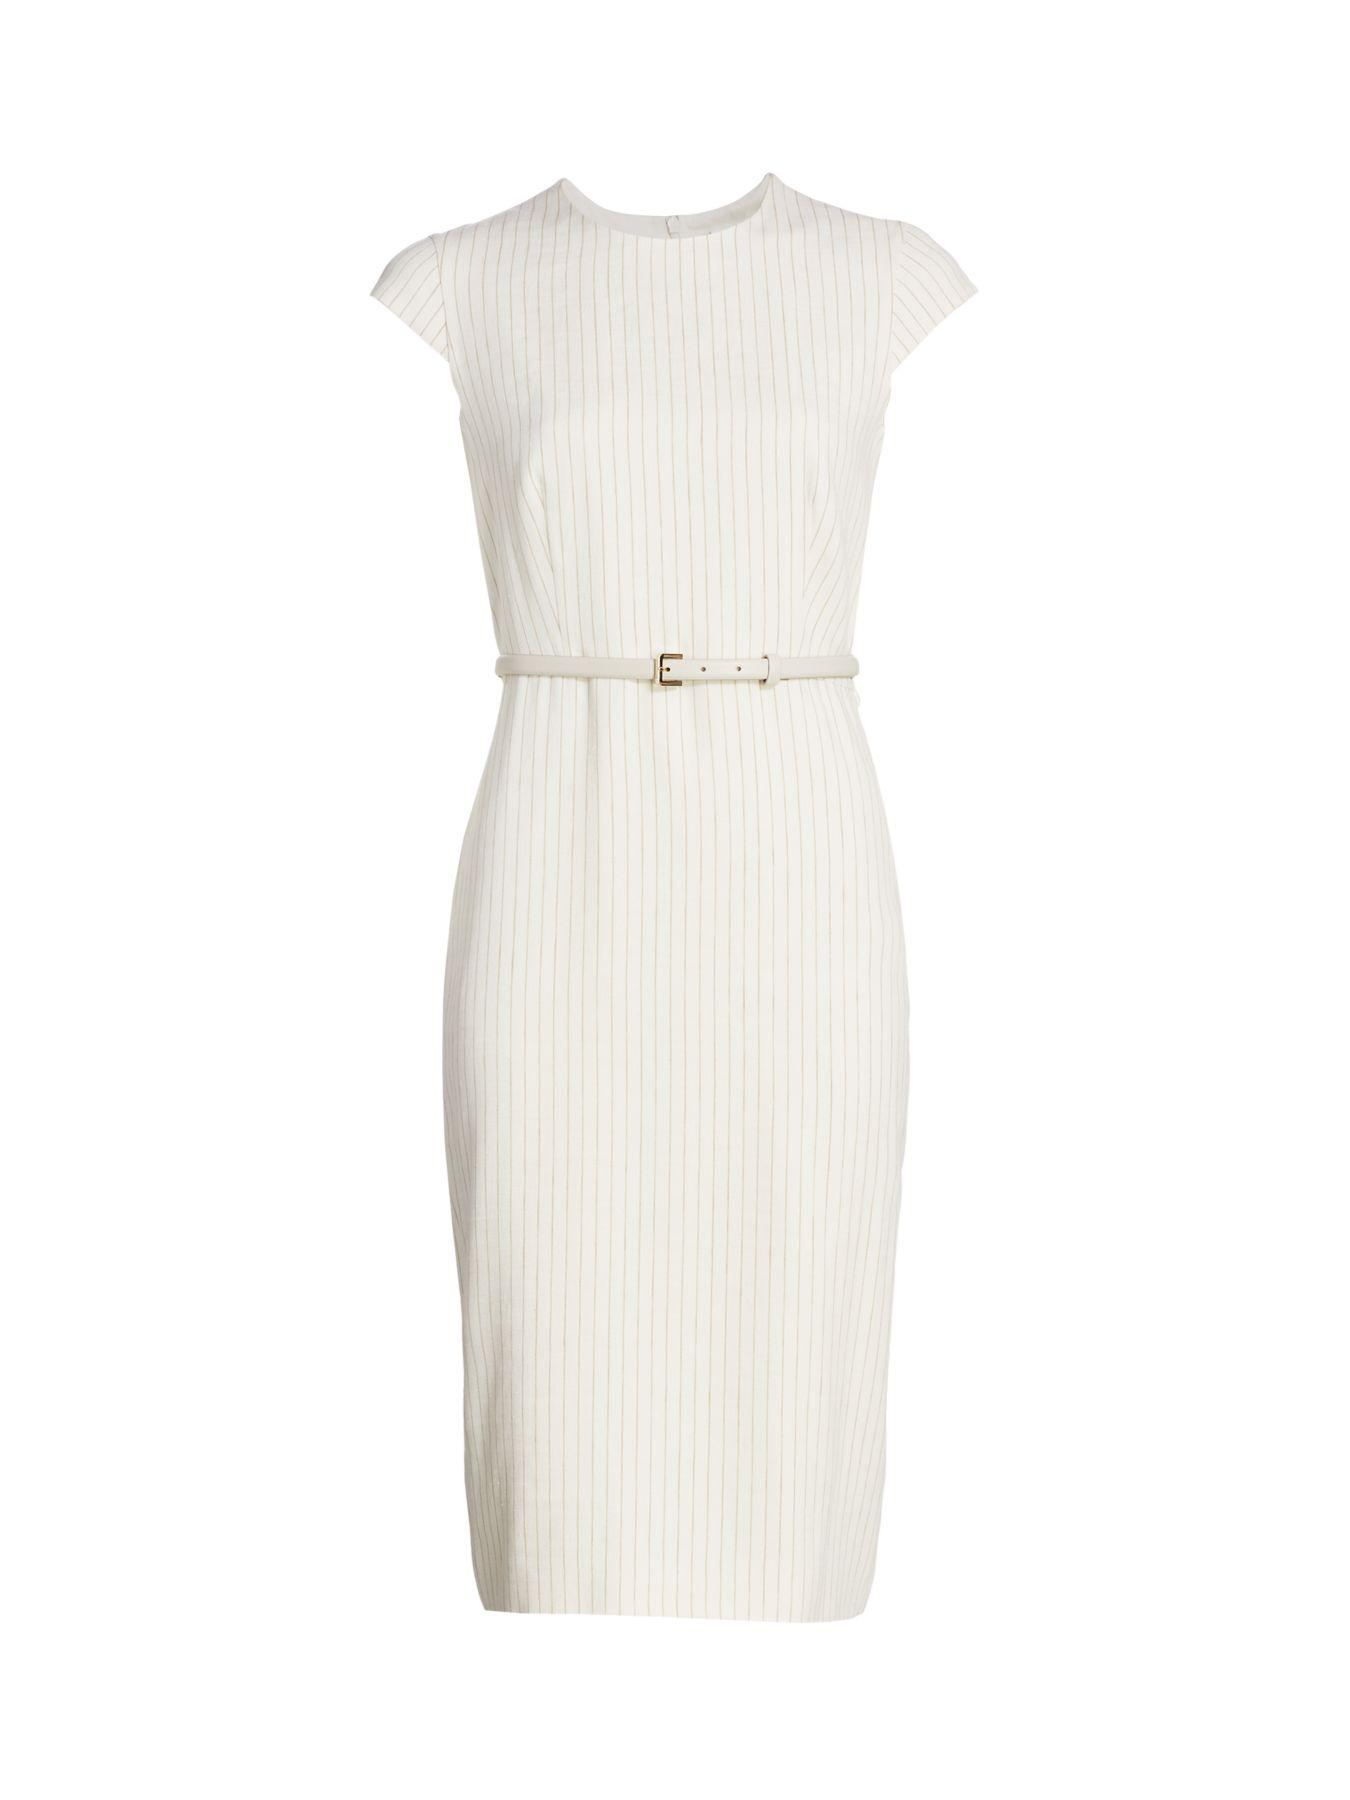 Max Mara Leandro Pinstripe Linen & Silk Dress in White - Lyst